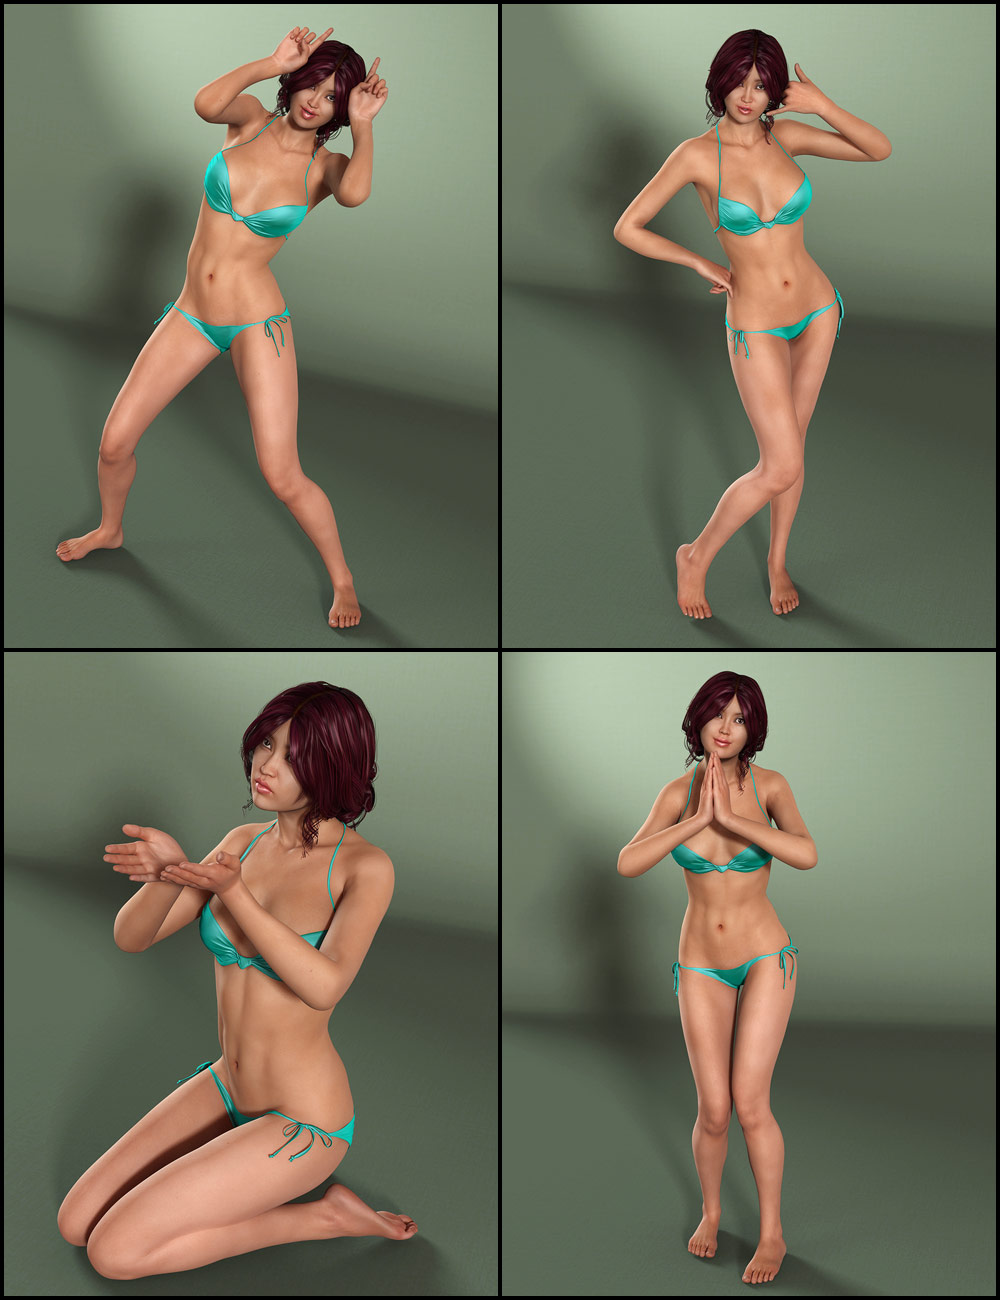 Cute 'n' Playful Poses for Mei Lin 6 by: blondie9999, 3D Models by Daz 3D